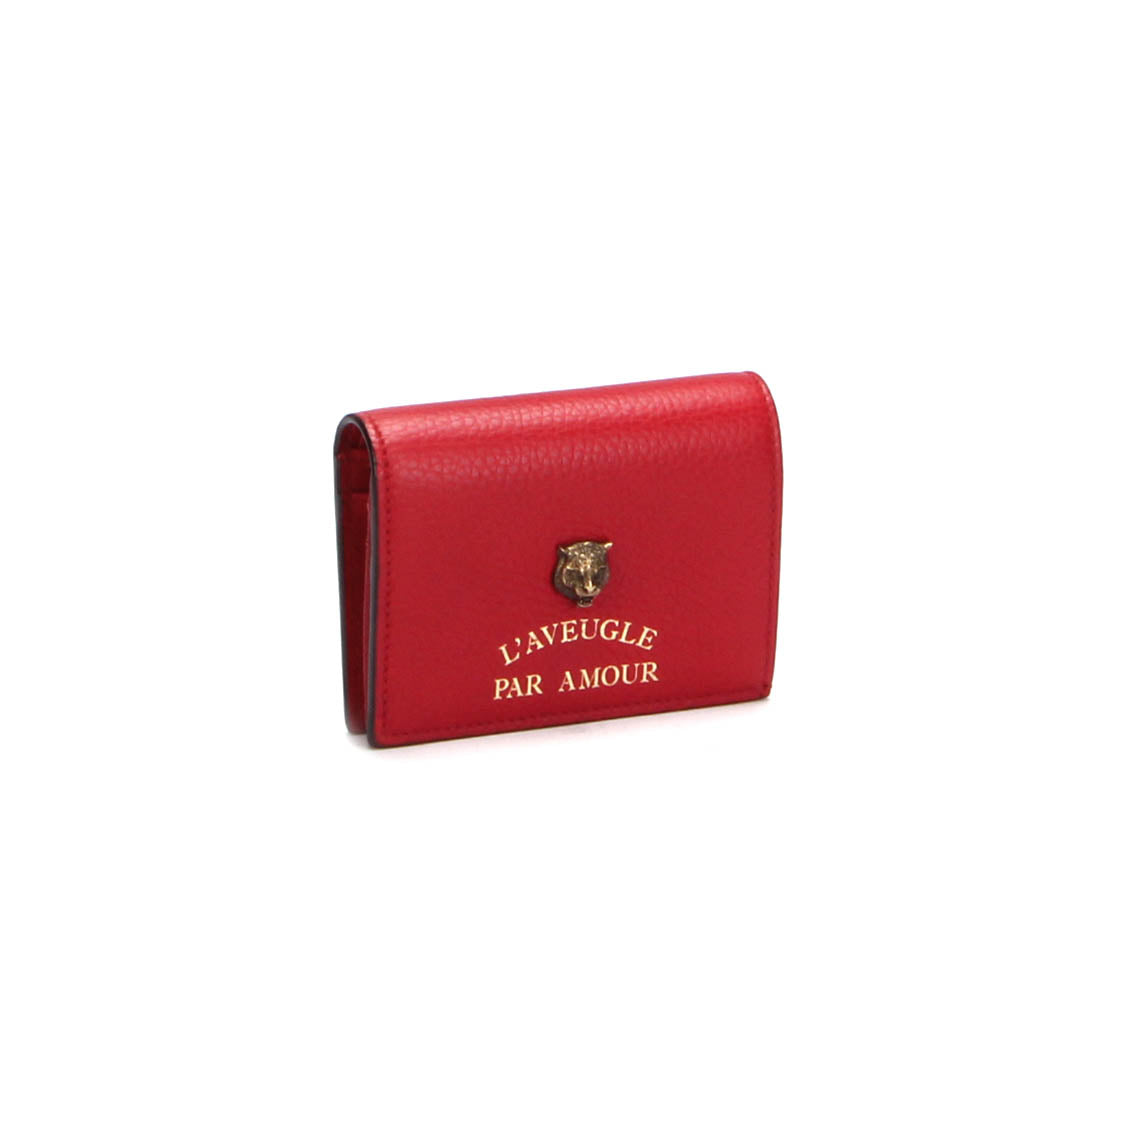 L'aveugle Par Amour Leather Small Wallet 453169